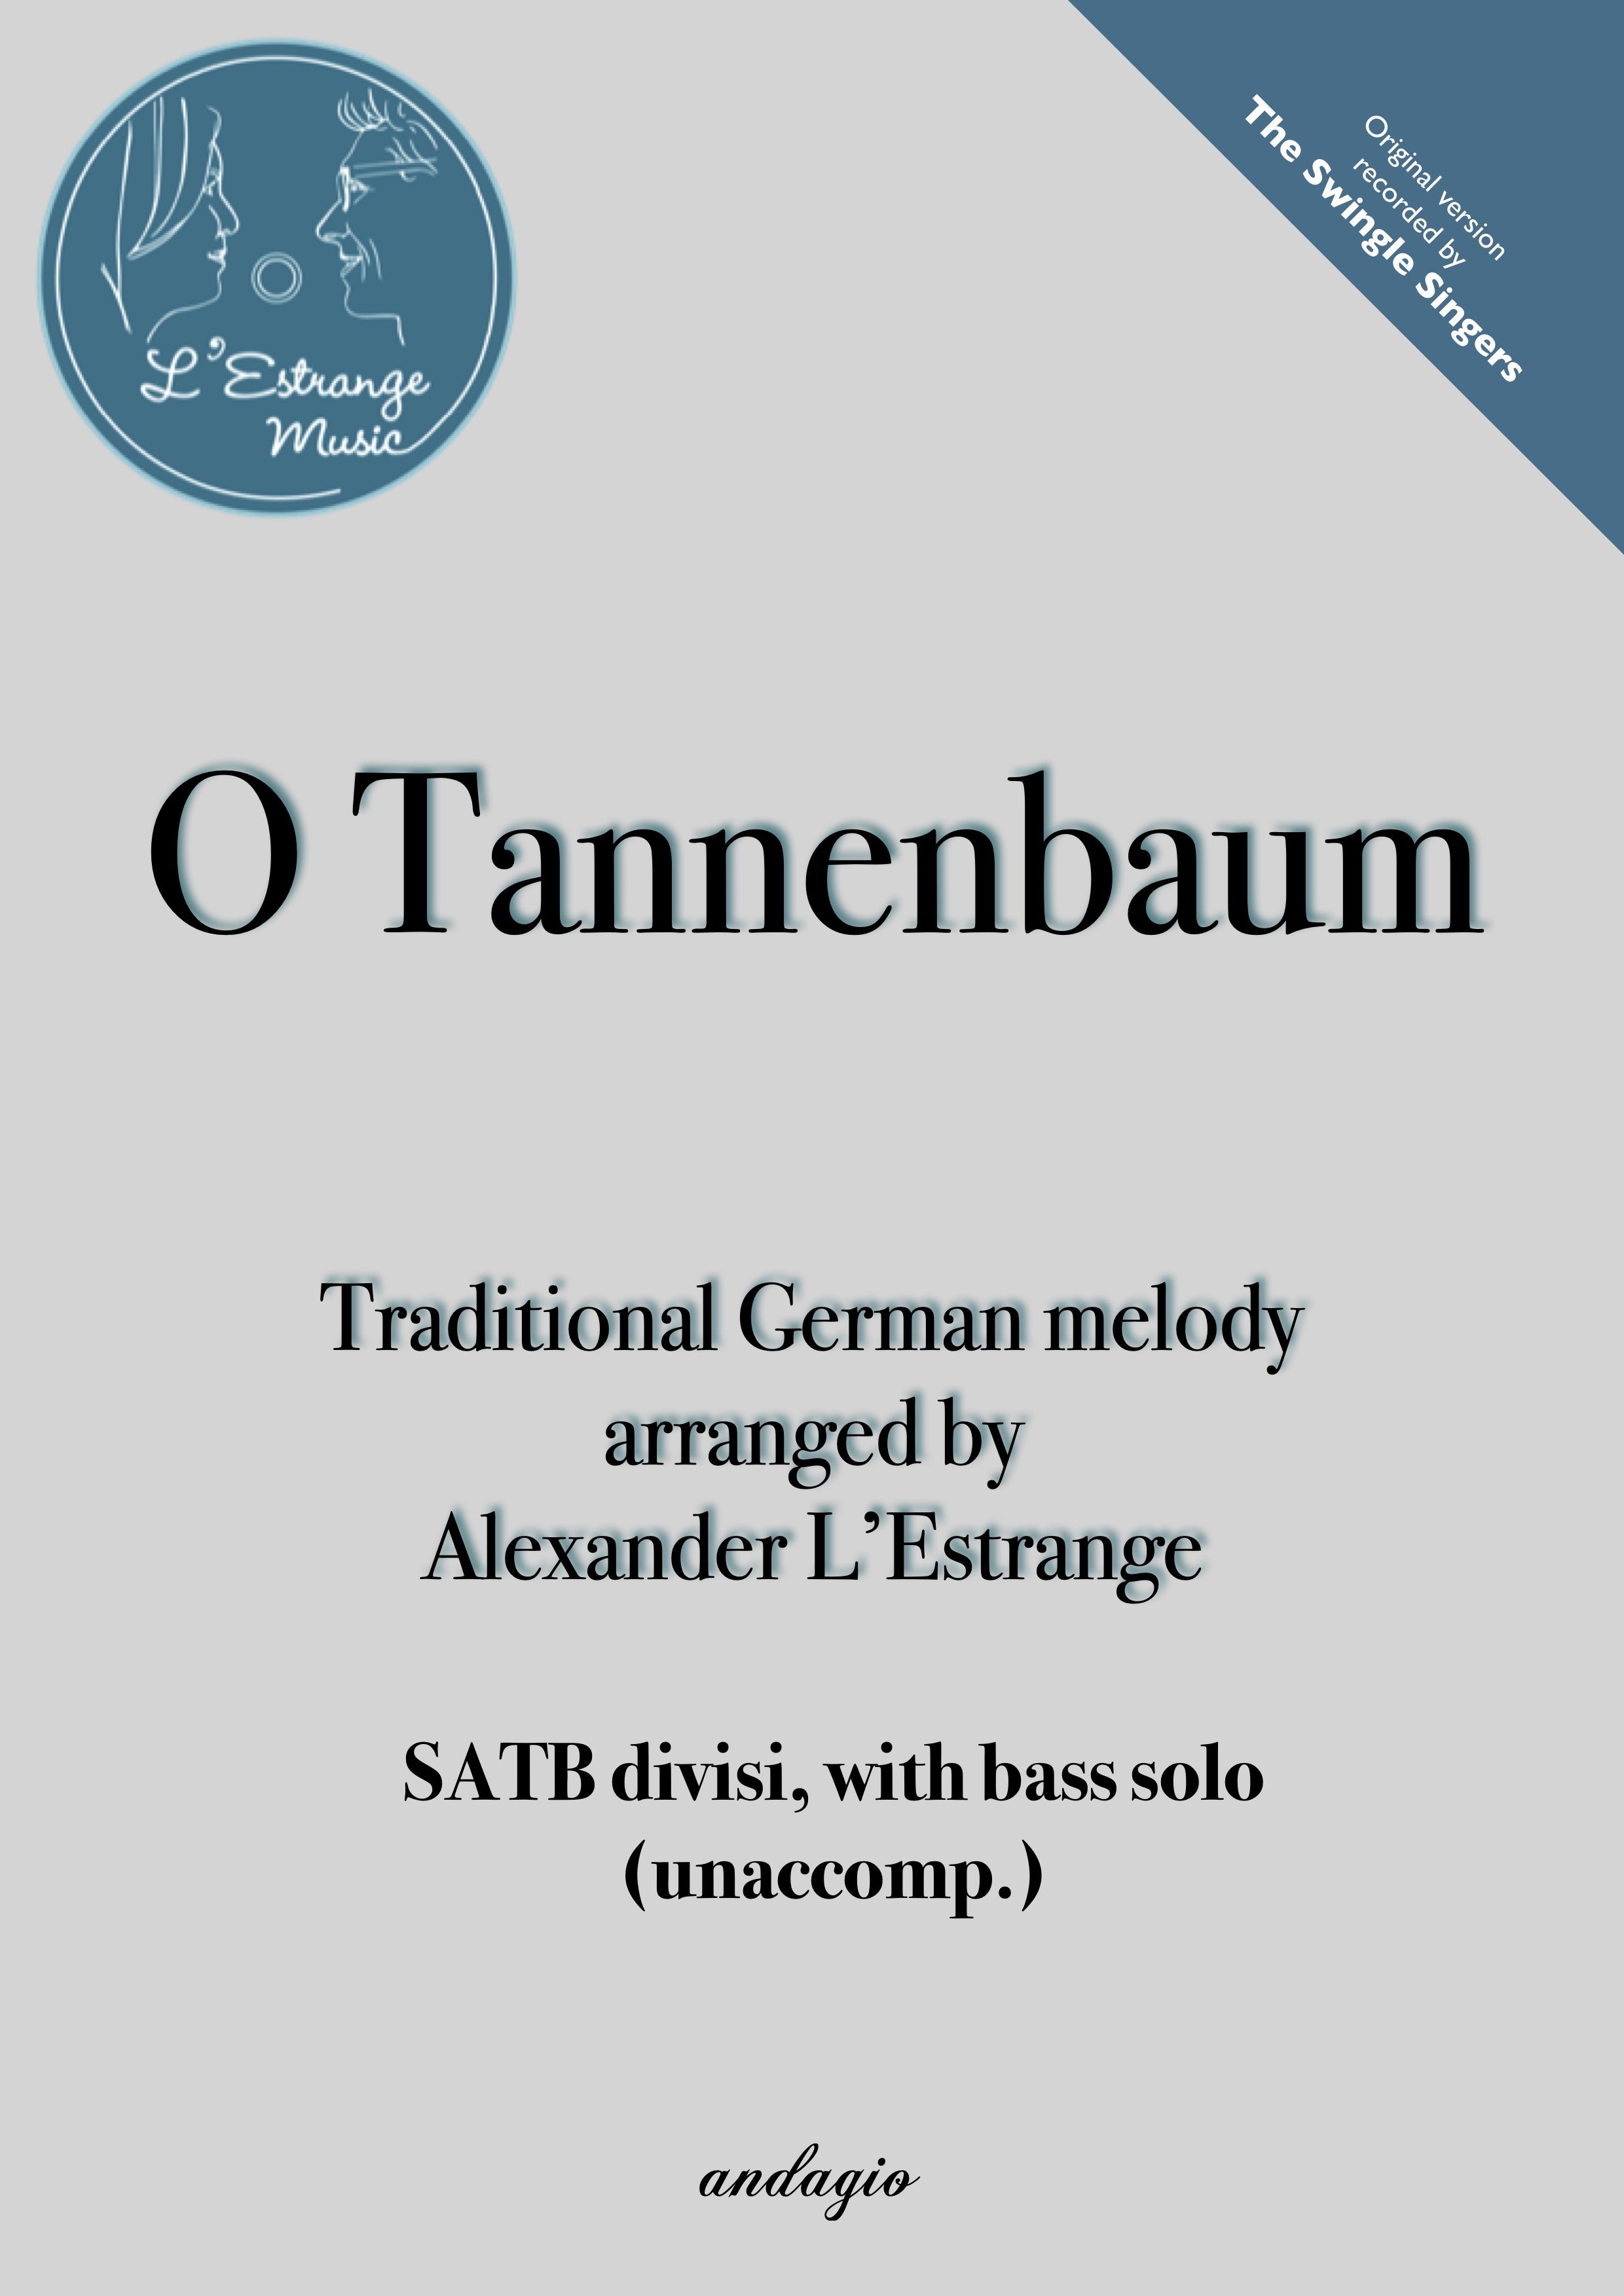 O Tannenbaum arranged by Alexander L'Estrange COVER.jpg